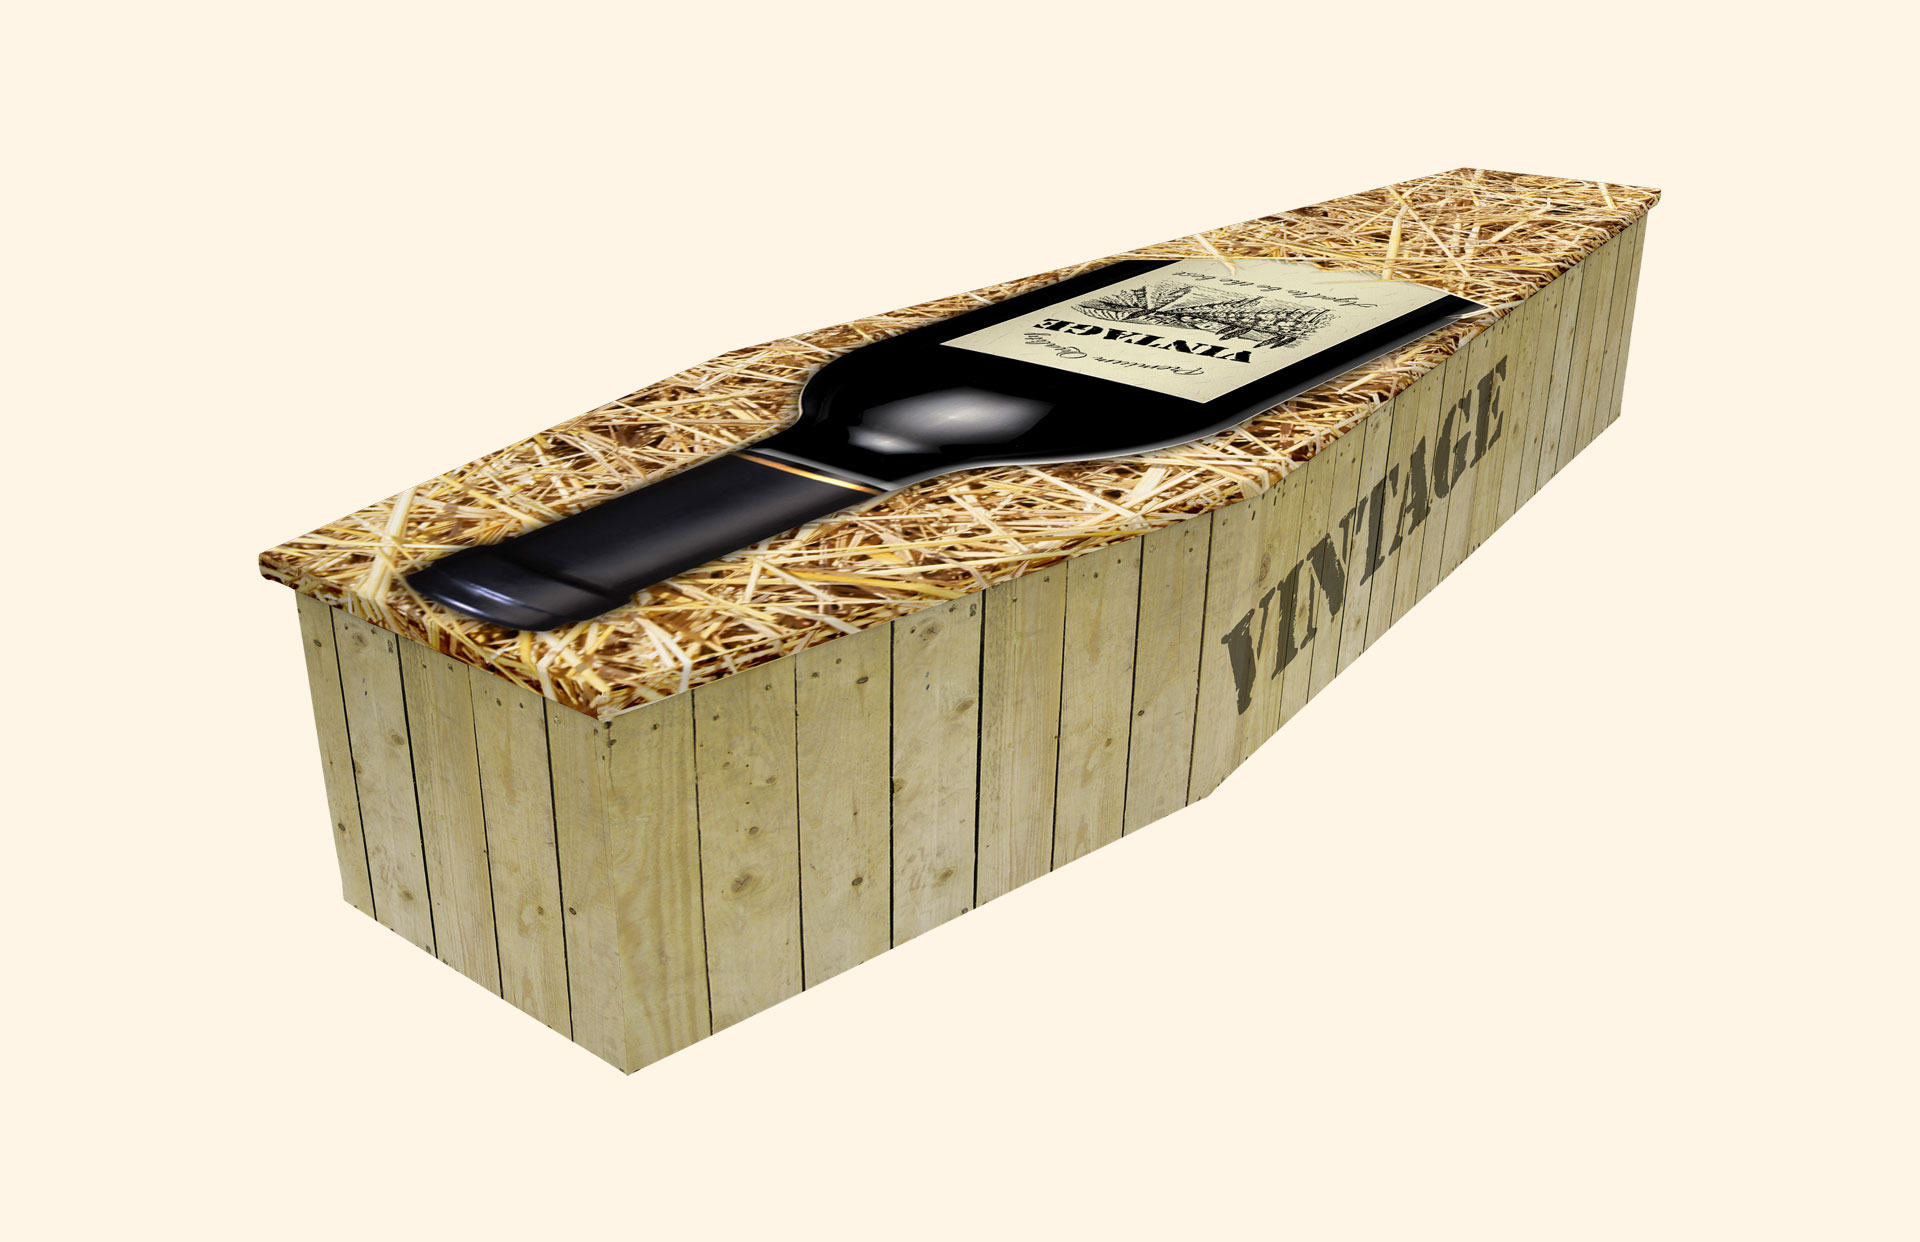 Bottle of Wine design on a cardboard coffin